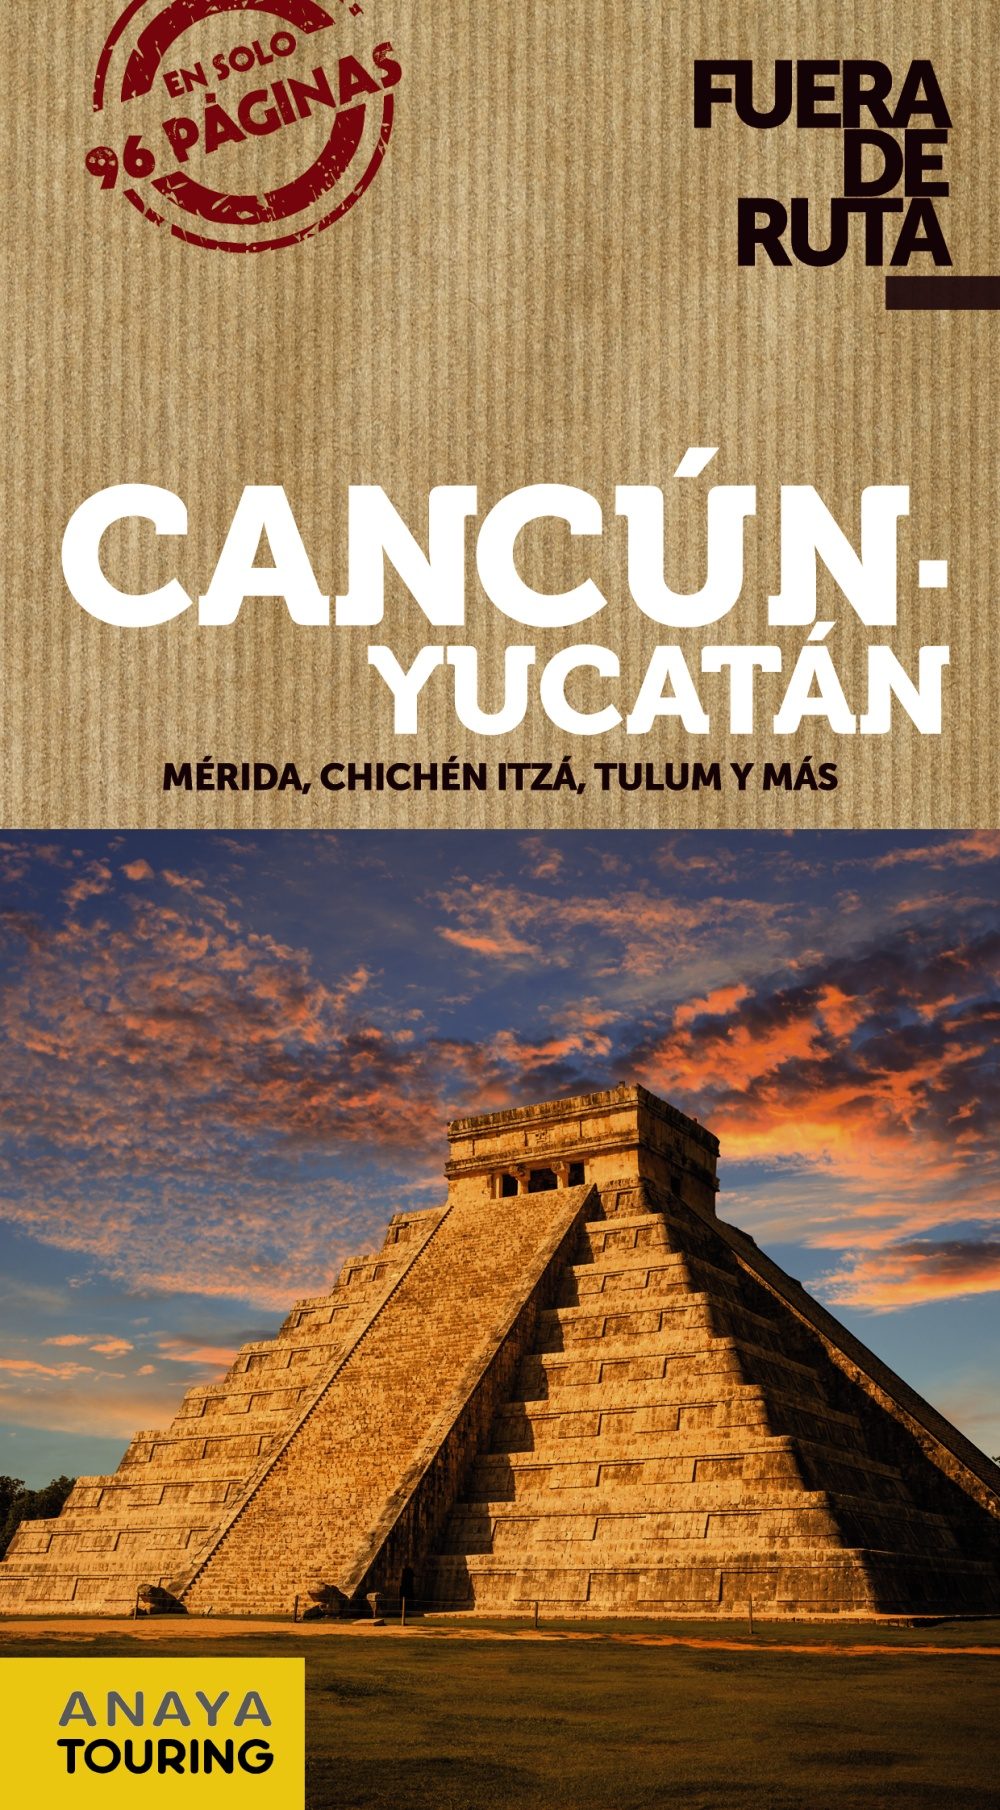 Cancún - Yucatán (Fuera de ruta)